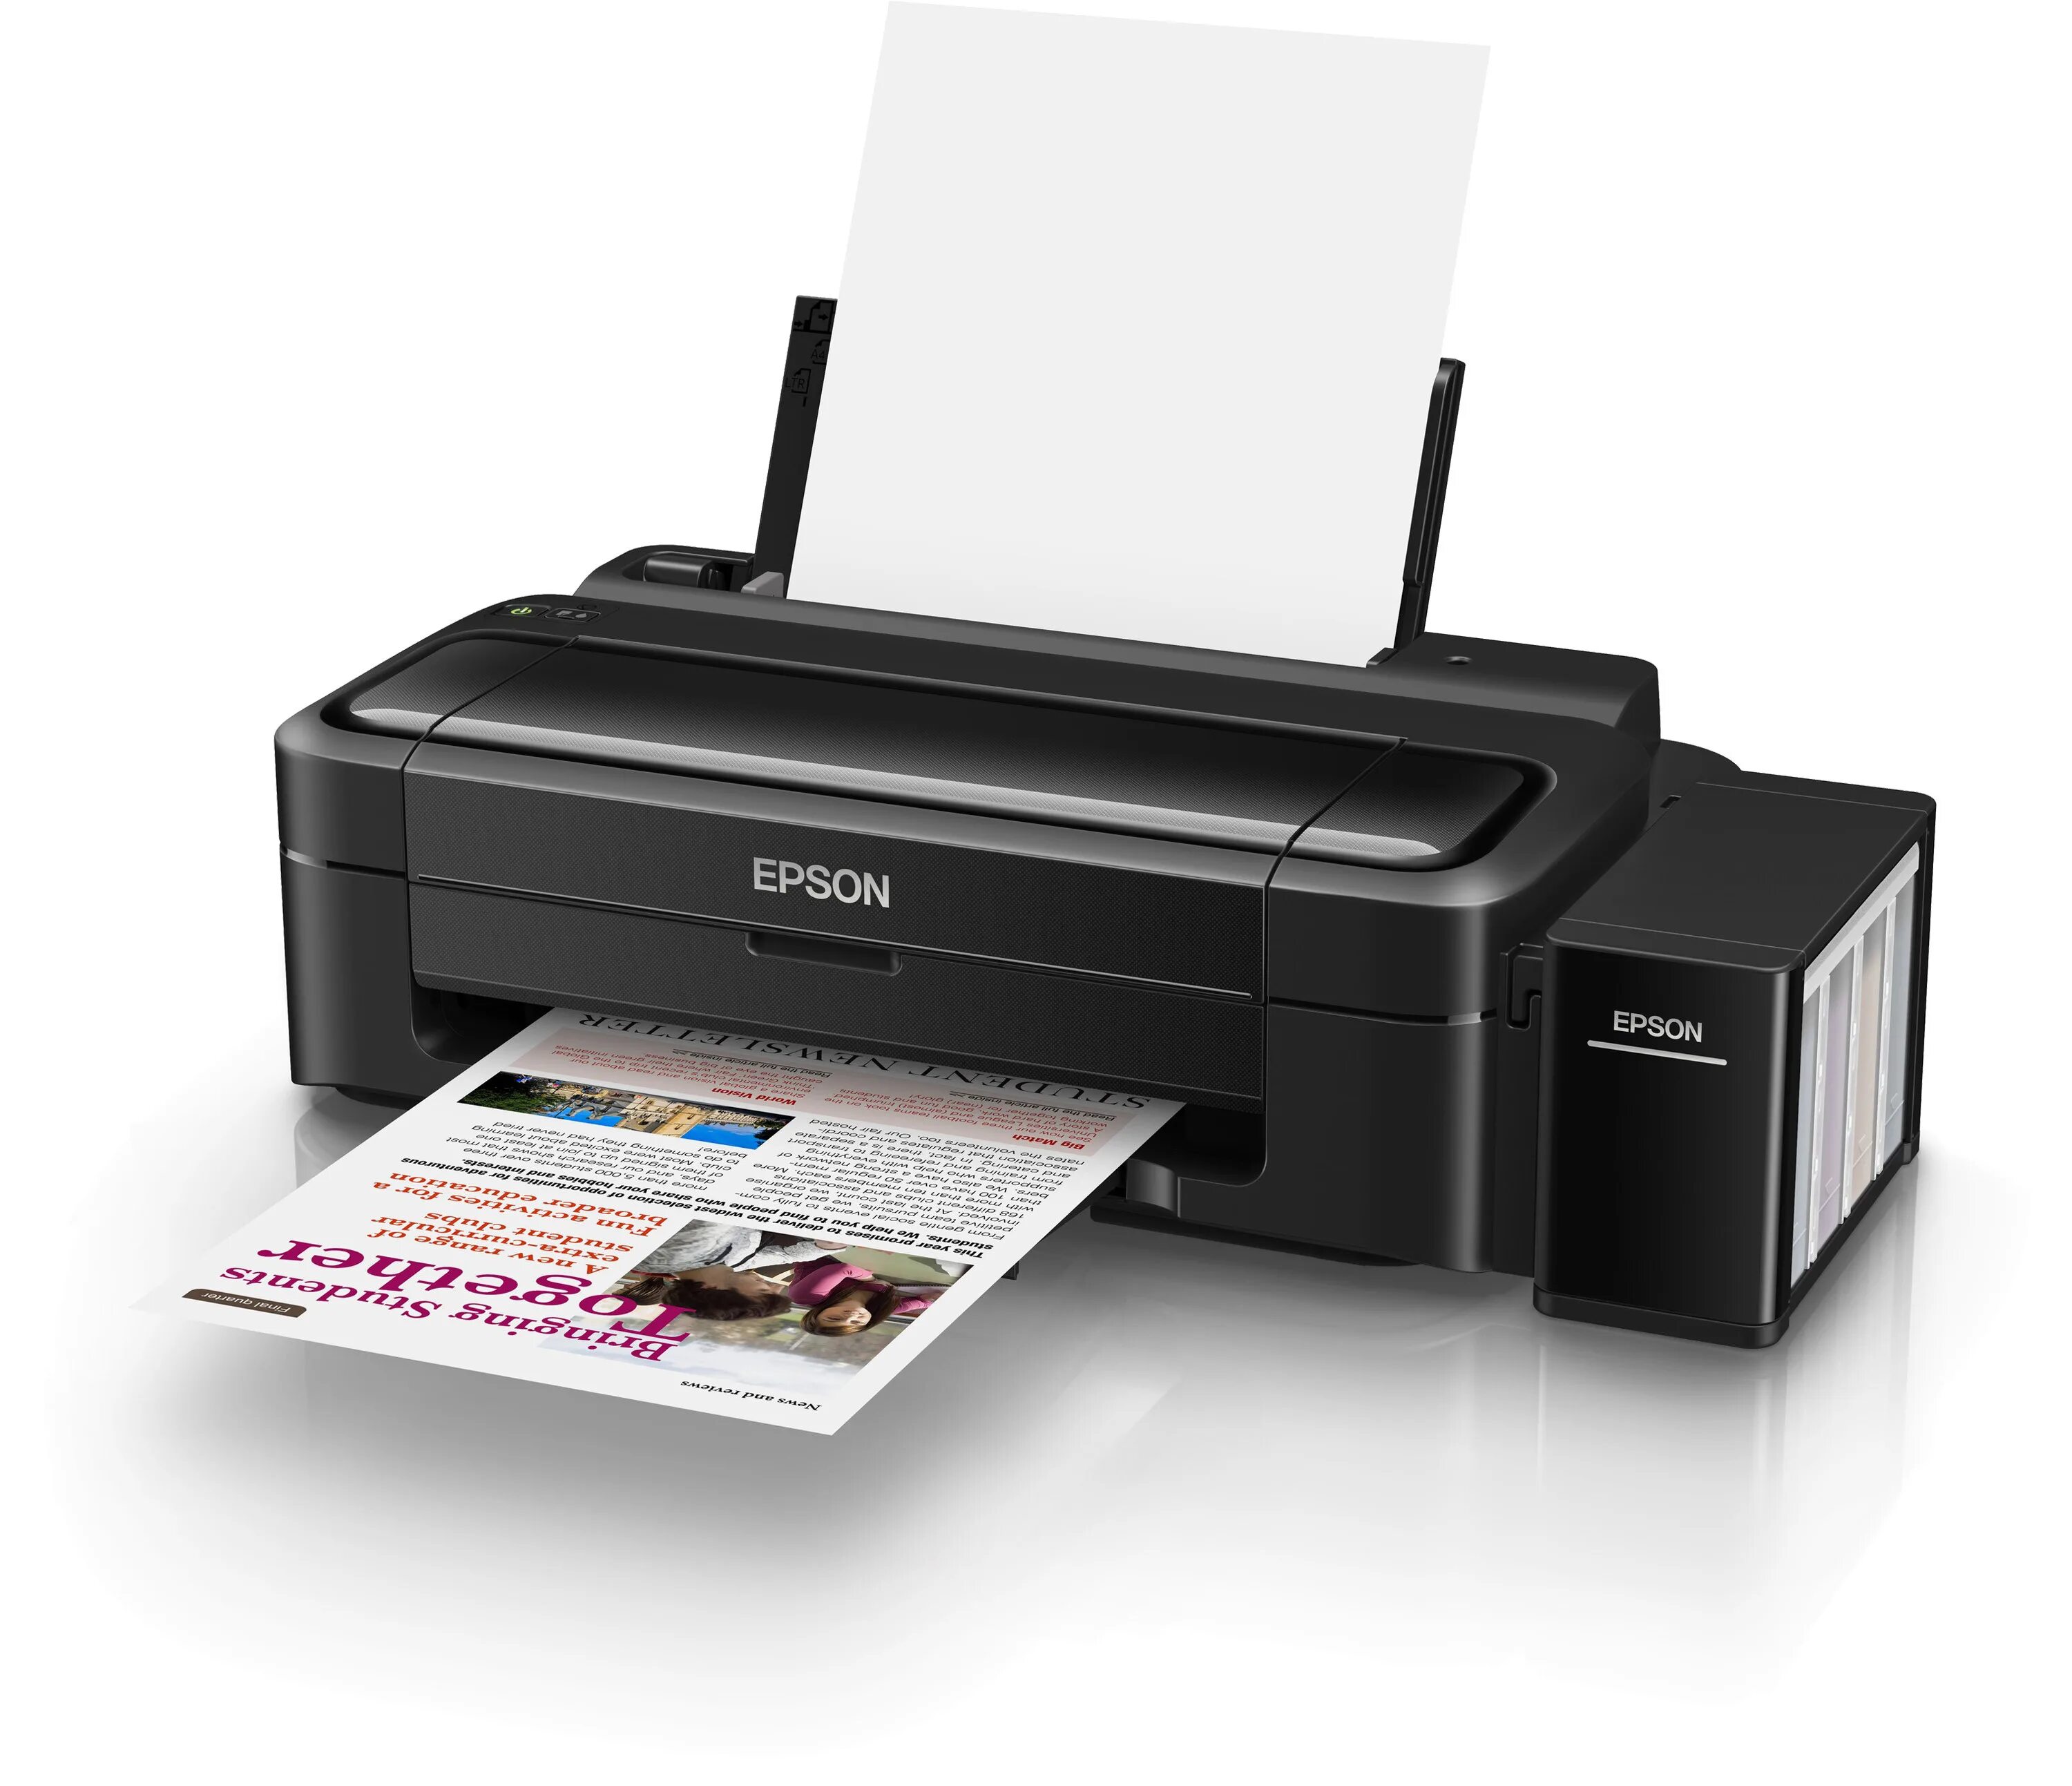 Принтер Эпсон l132. Принтер Epson l3100. Принтер струйный Epson l132. Epson l1110. Принтер купить в ярославле